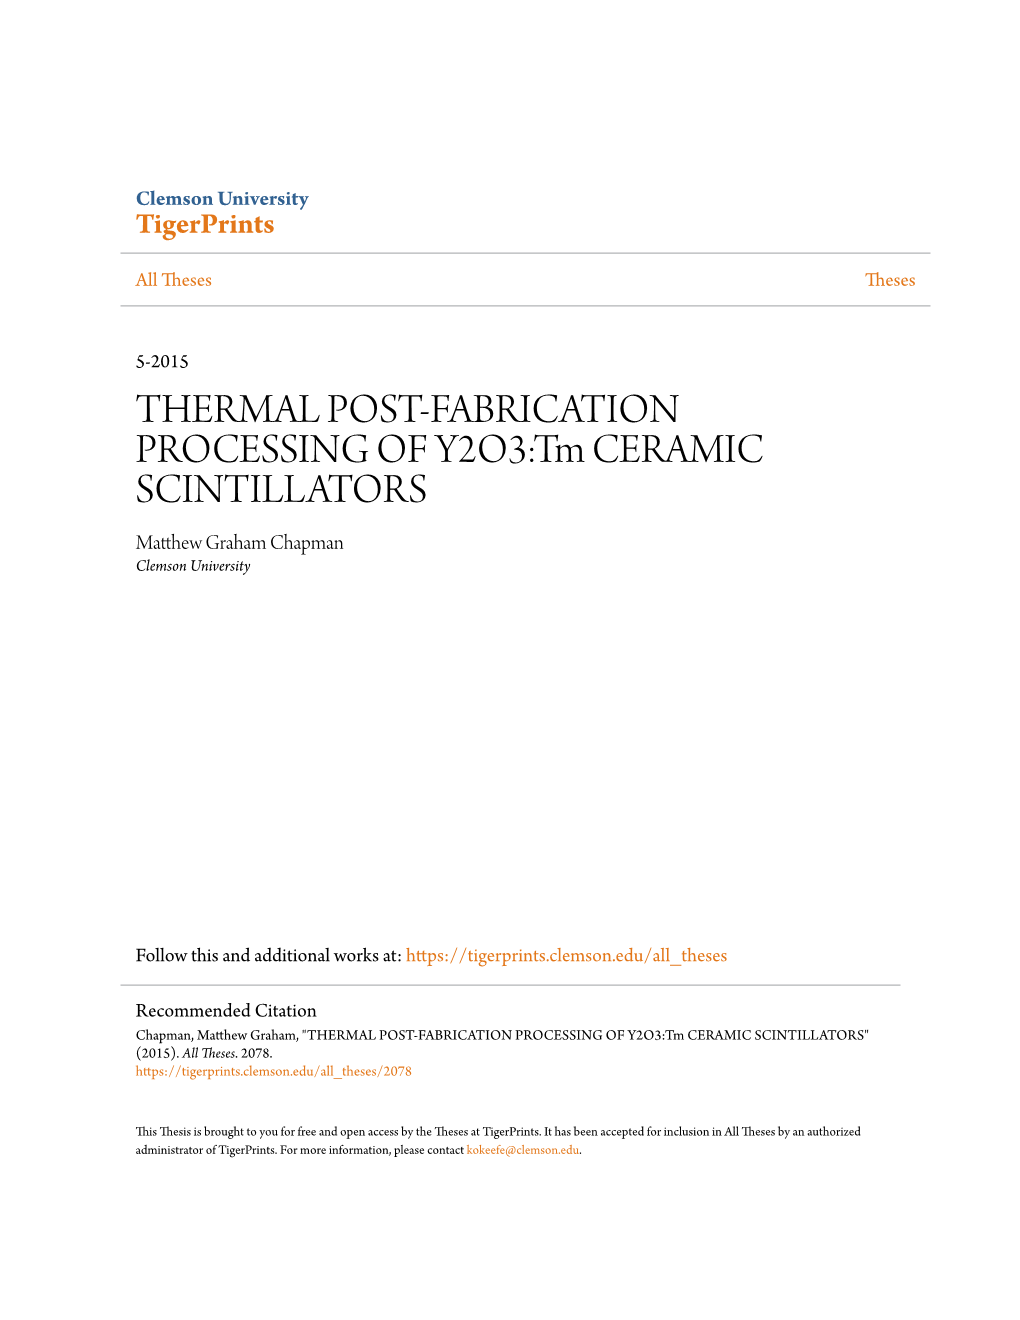 THERMAL POST-FABRICATION PROCESSING of Y2O3:Tm CERAMIC SCINTILLATORS Matthew Graham Chapman Clemson University